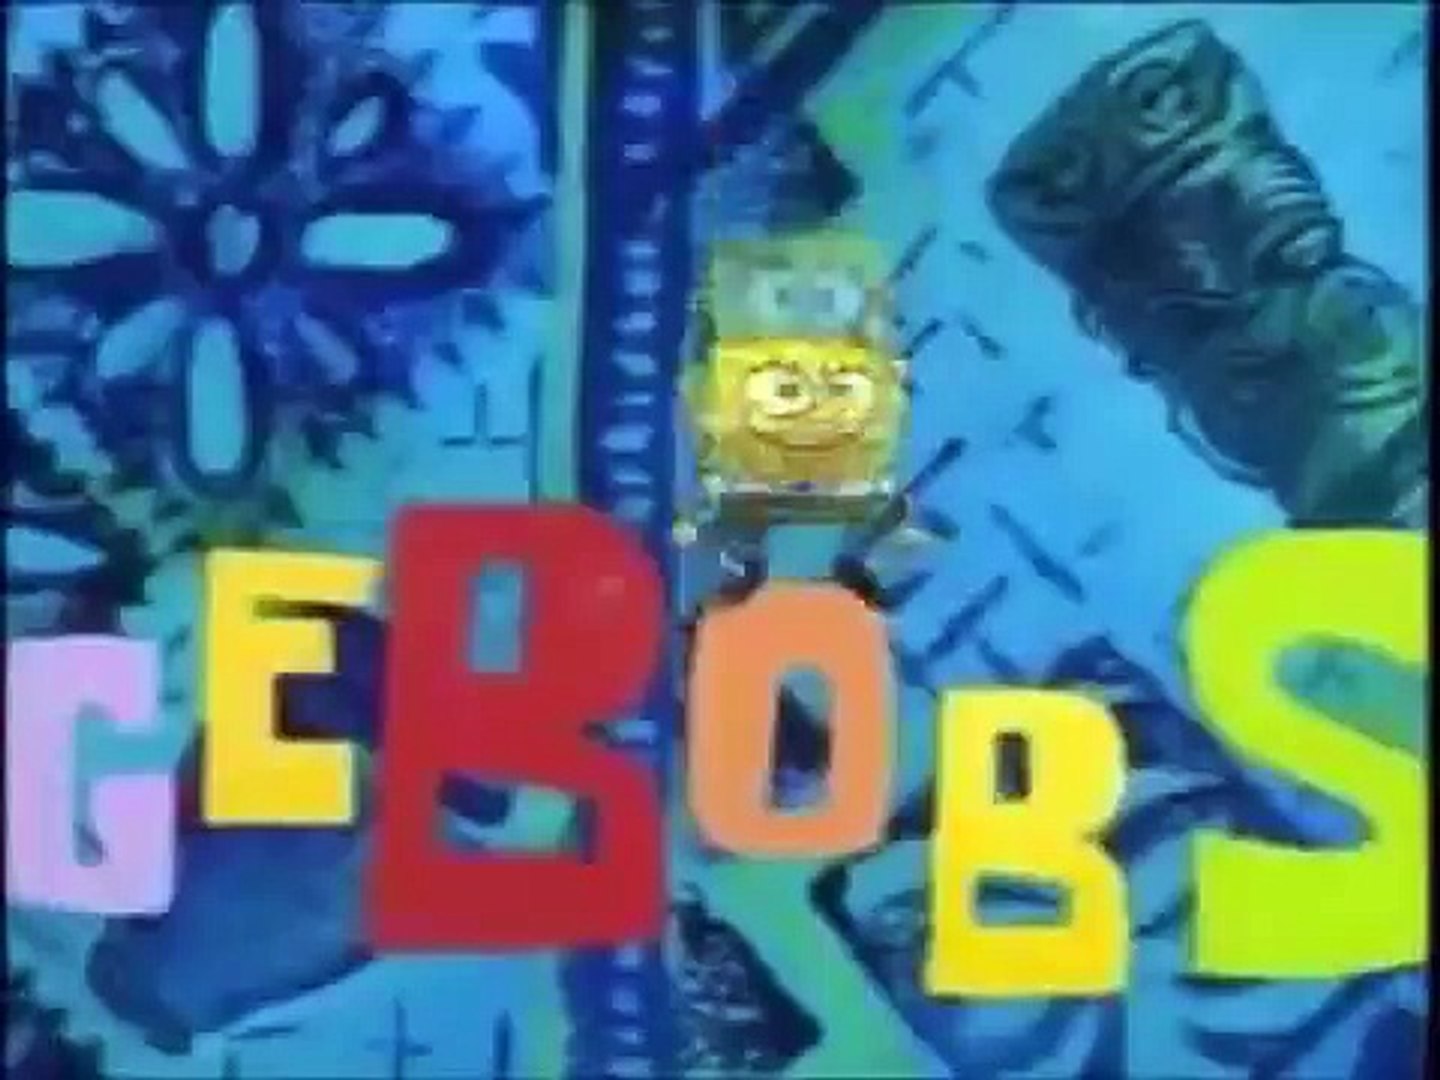 Spongebob theme song reversed